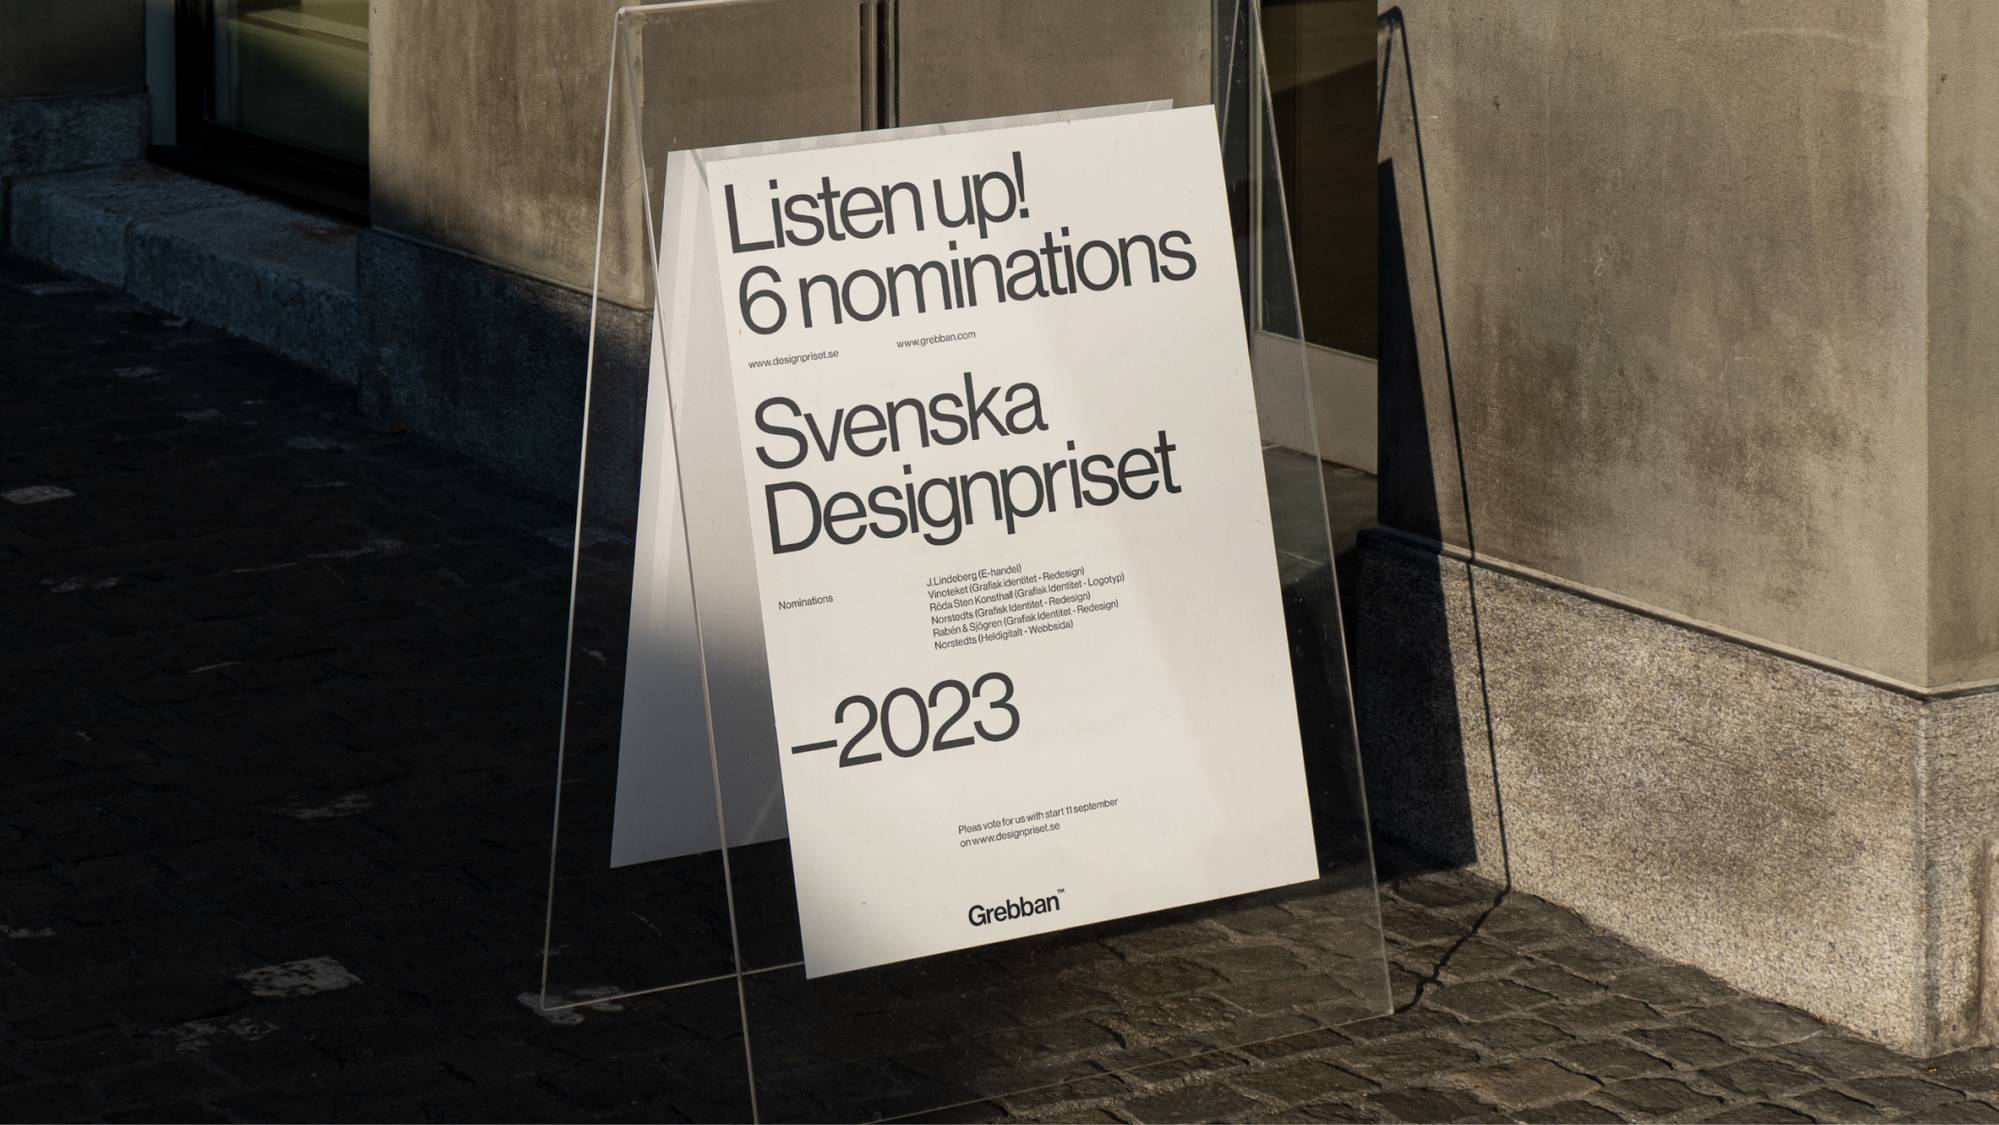 Six nominations in Swedish Design Award 2023